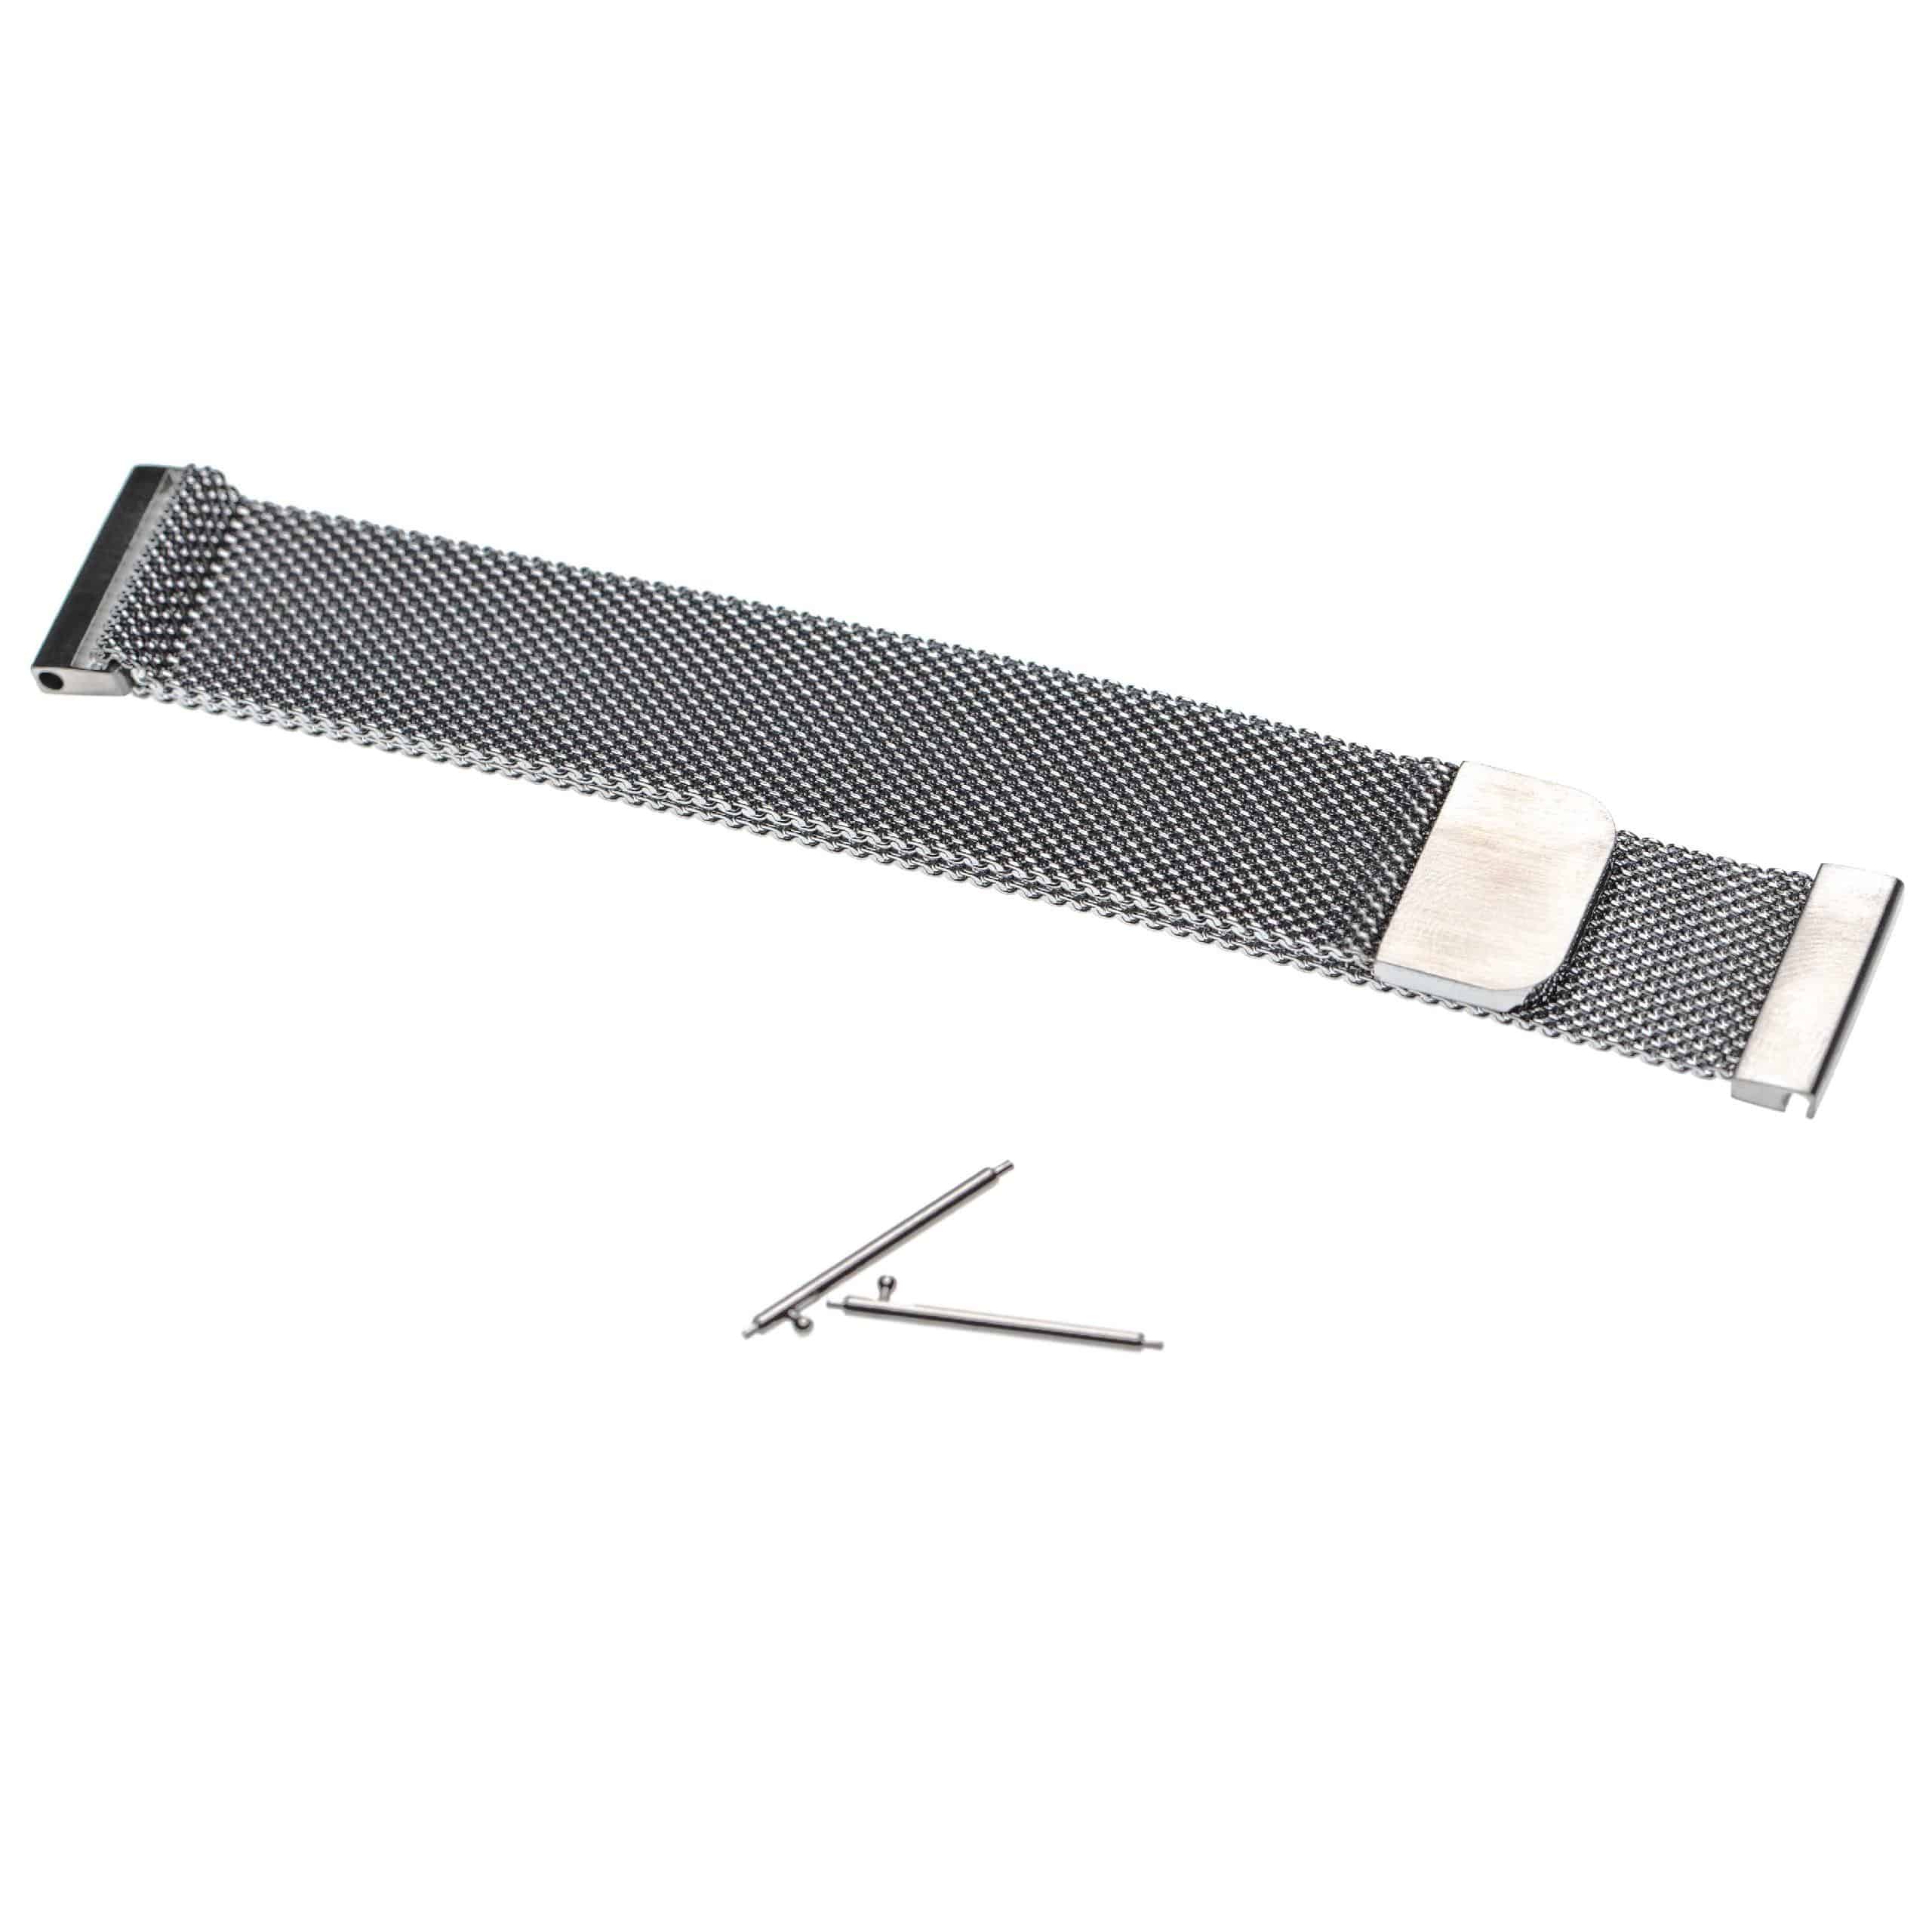 Armband für Garmin Forerunner Smartwatch - Bis 191 mm Gelenkumfang, Edelstahl, silber